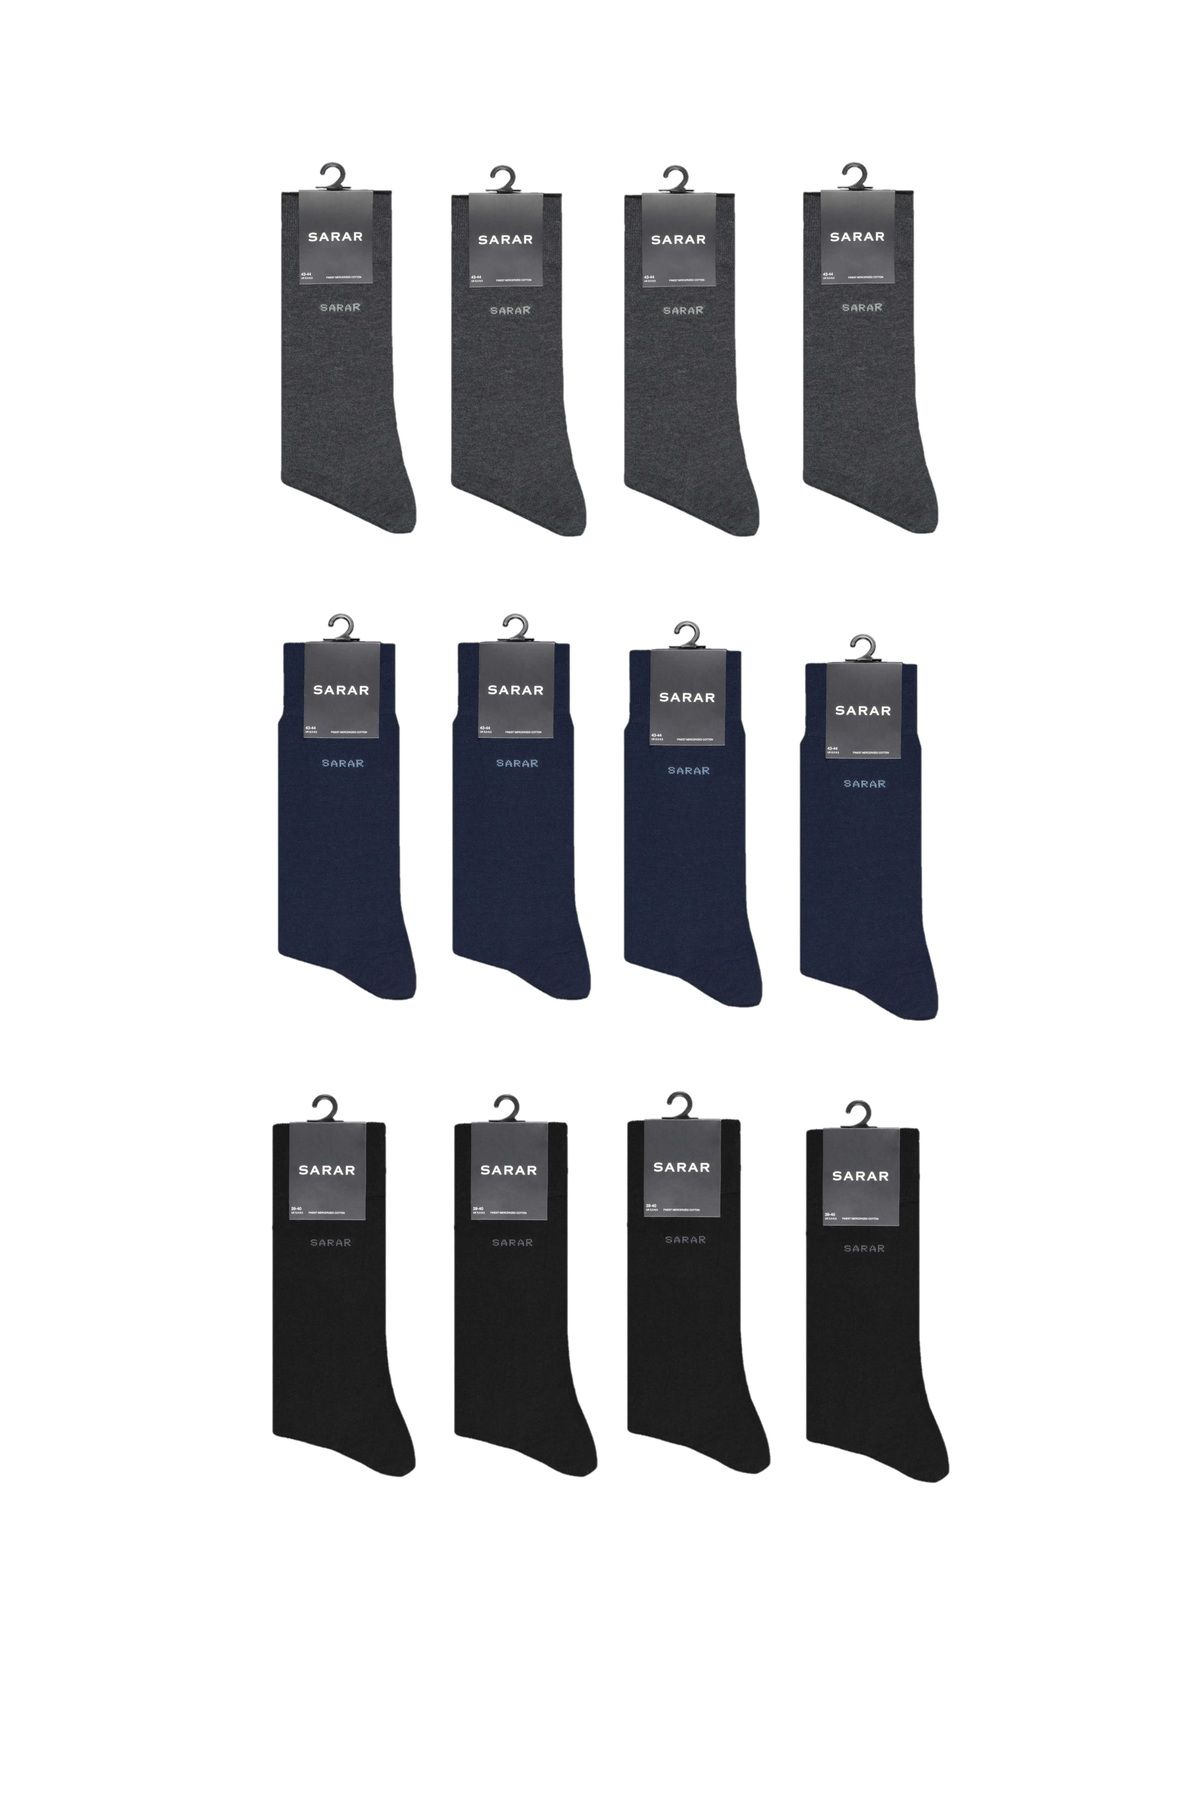 CCS Sarar 12 Çift Erkek Pamuk Karışık Siyah Renk Çorap